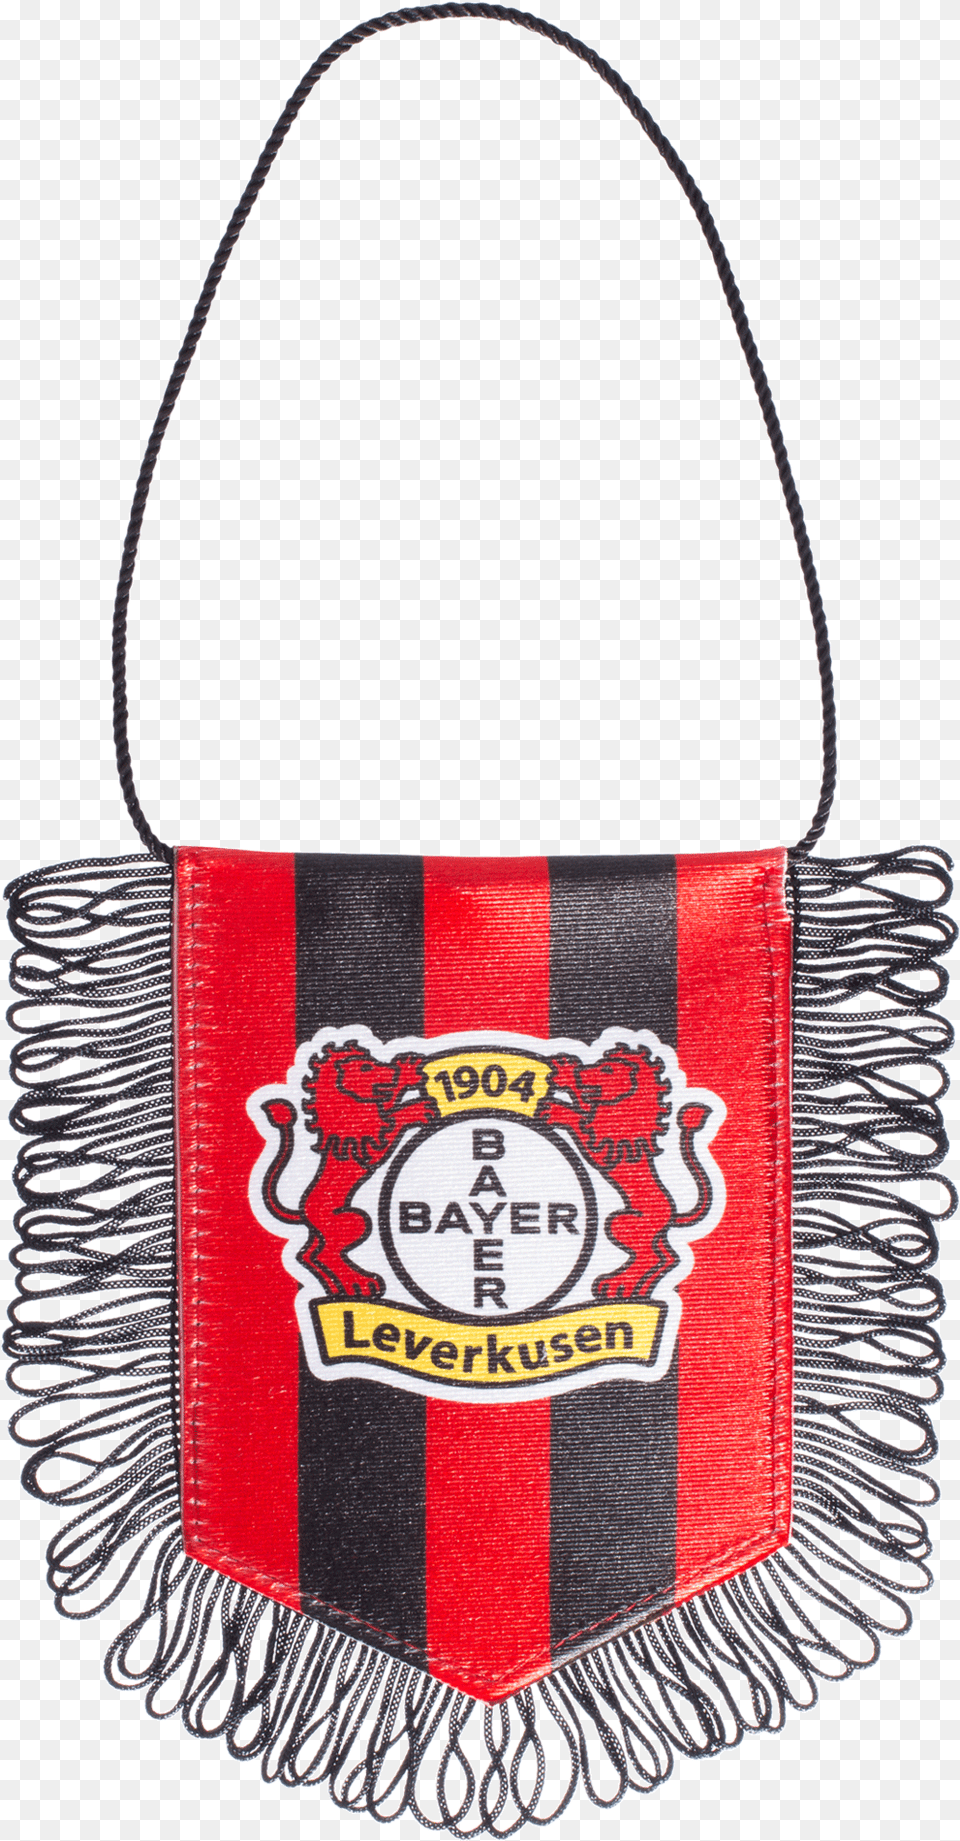 Car Pennant Blackred Bayer 04 Leverkusen Fanshop Tote Bag, Accessories, Handbag, Purse Png